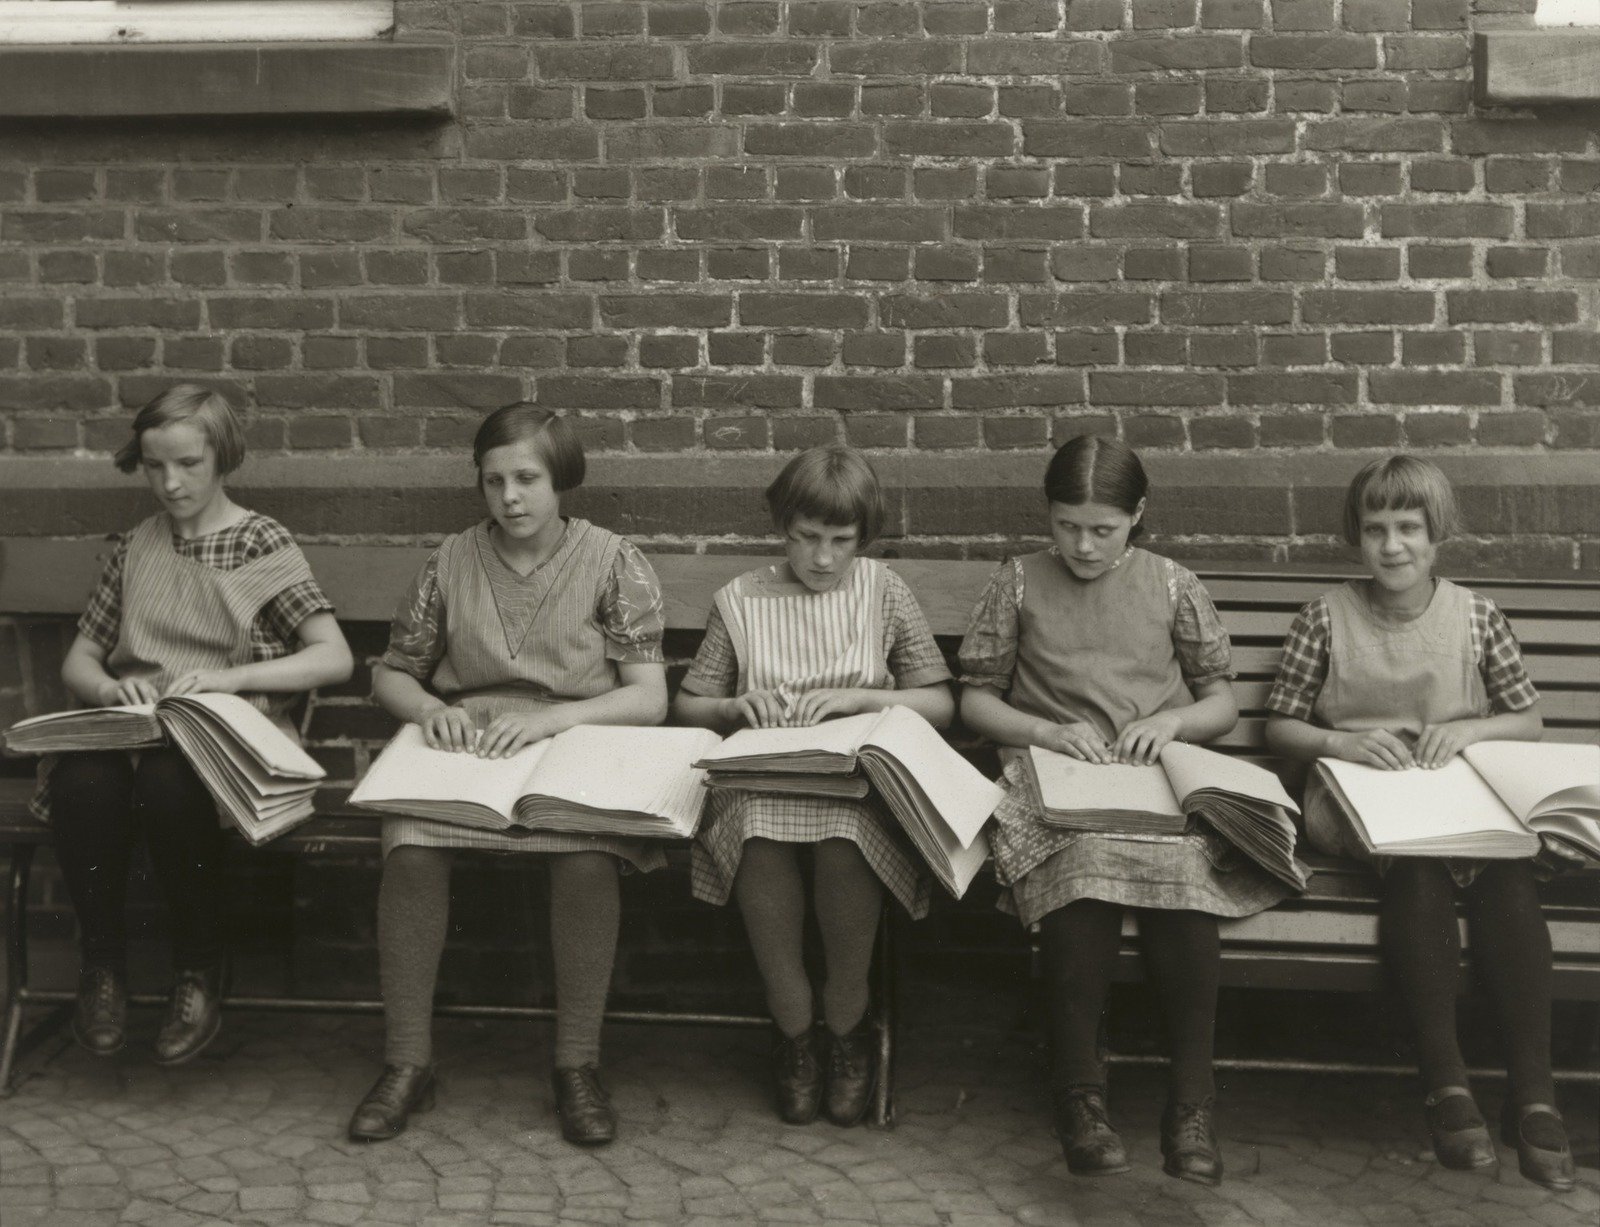 August Sander, Blind Children at their Lessons, 1930. &copy; 2019 Die Photographische Sammlung / SK Stiftung Kultur - August Sander Archiv, Cologne / ARS, NY